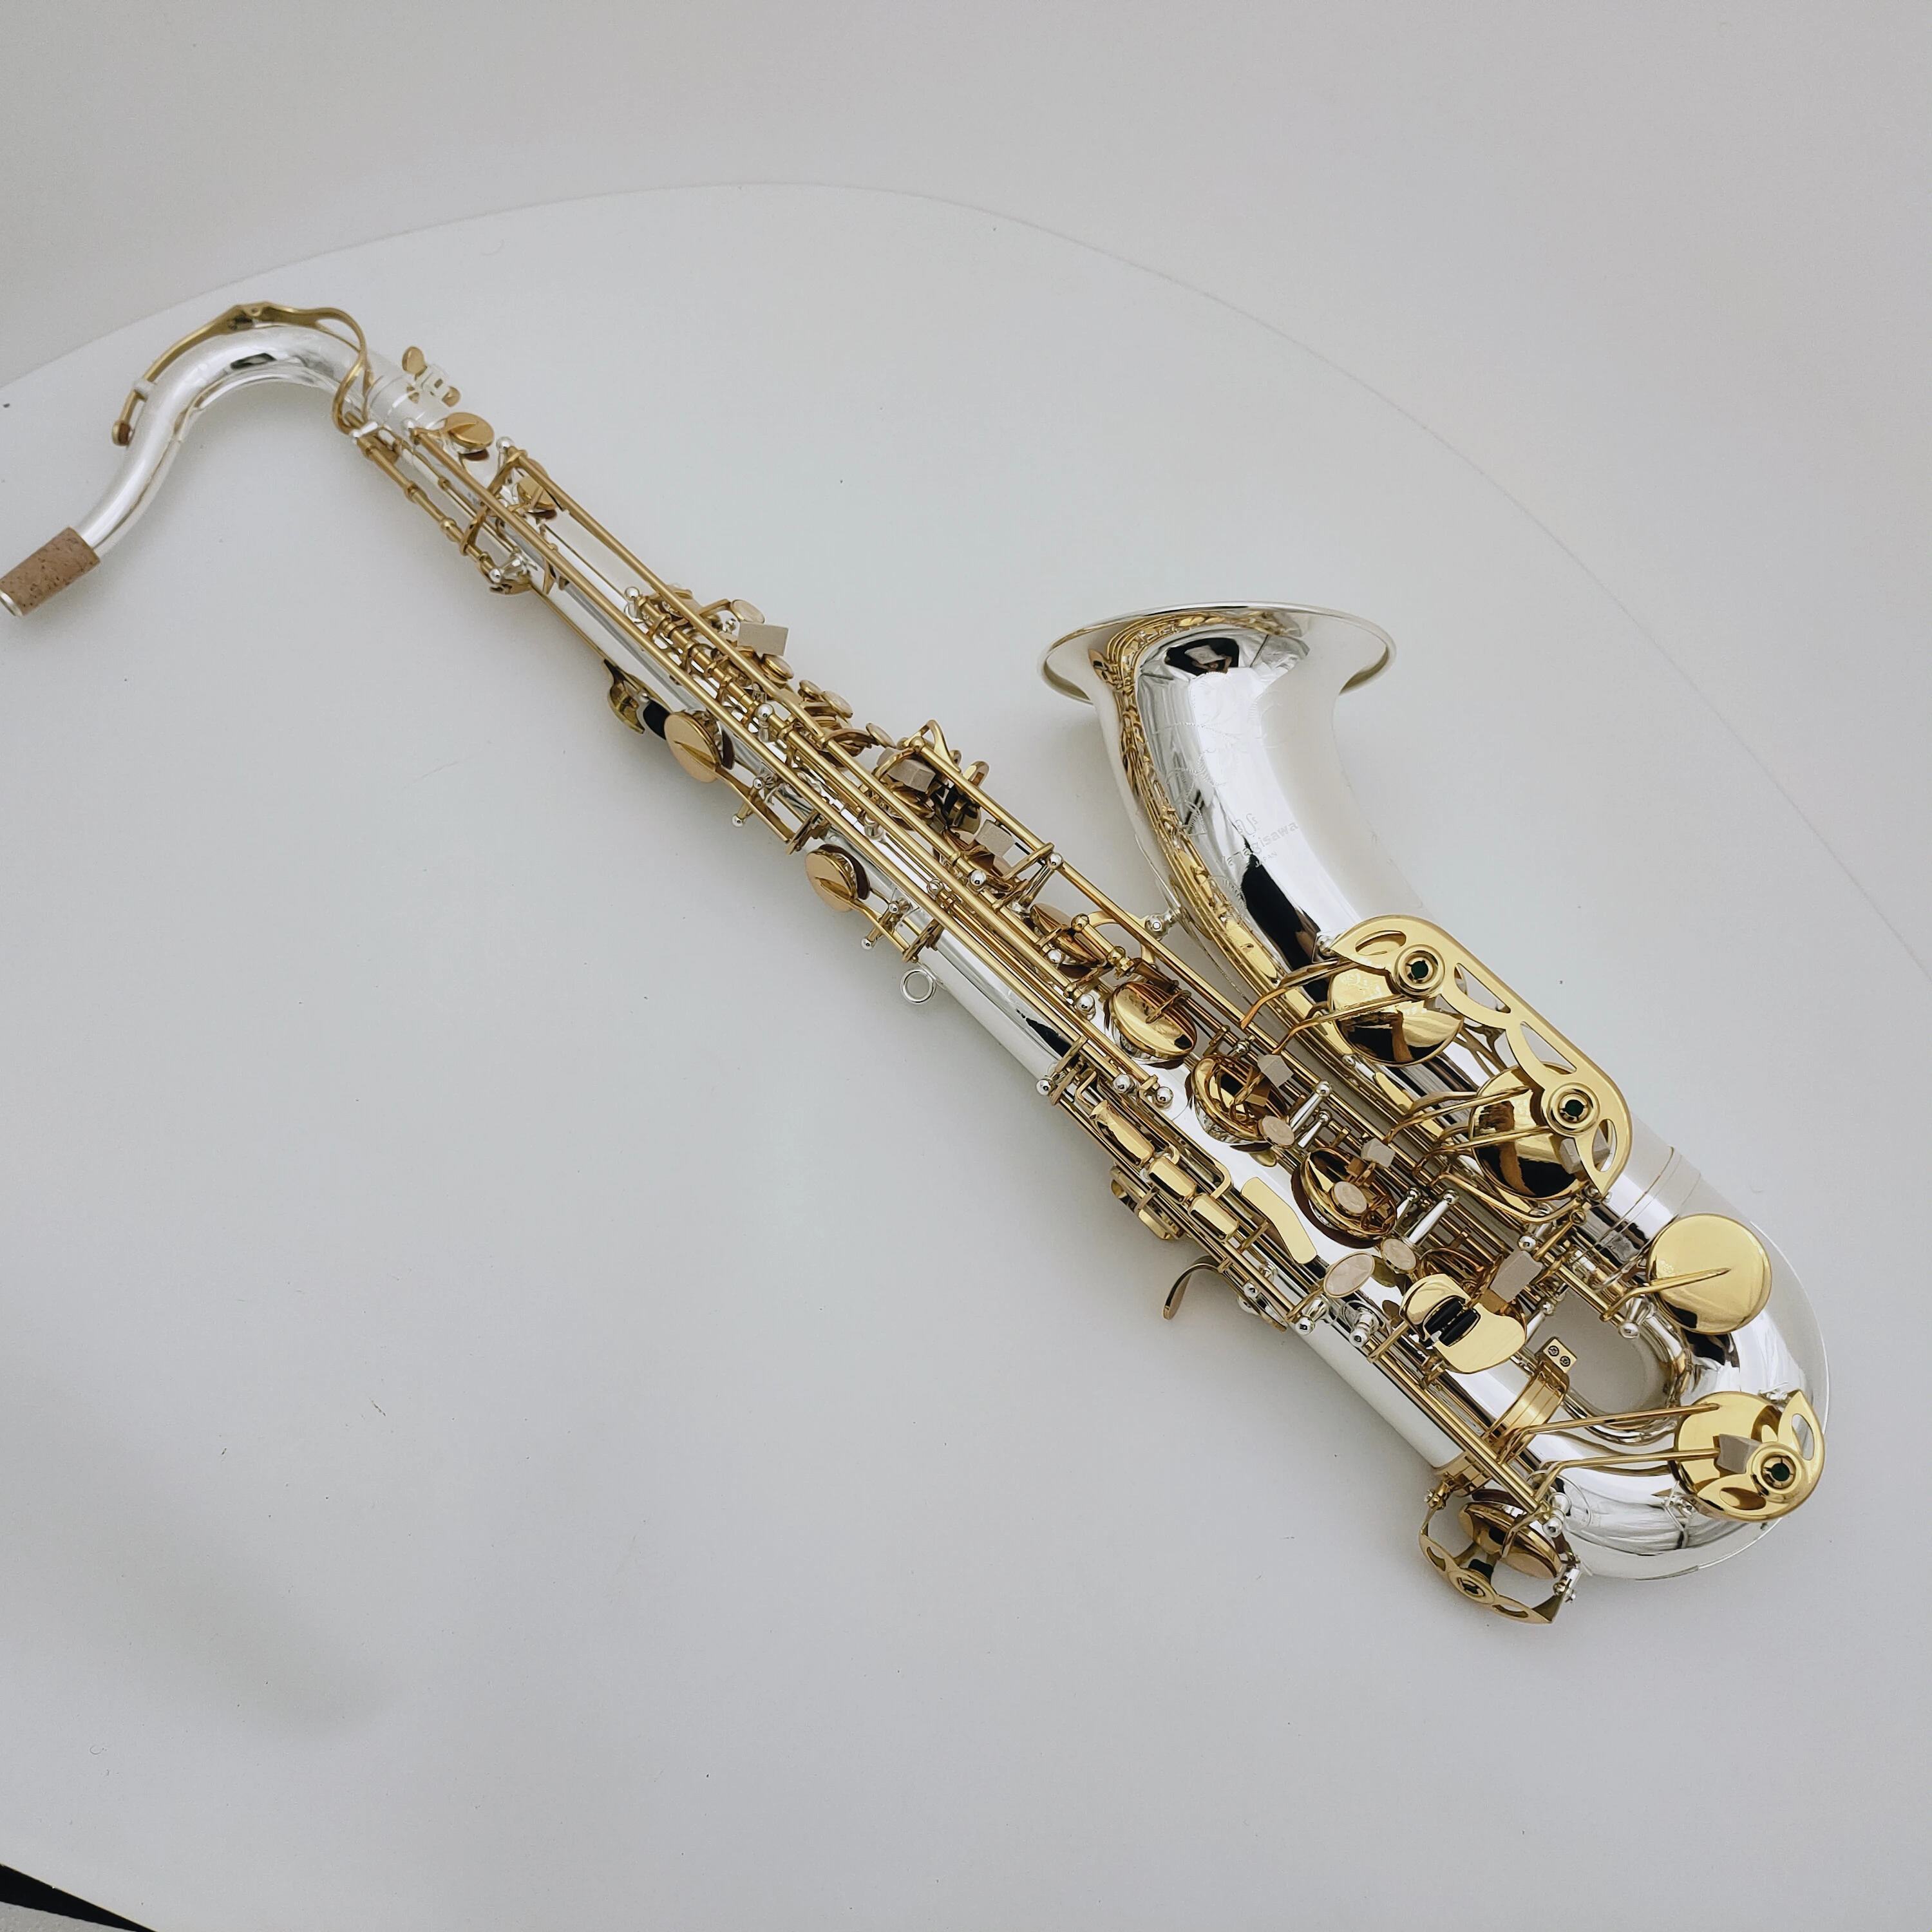 Japan YANAGISAWA T-WO37 T-9937 model Tenor Saxophone Bb Silver plated gold button Tenor Sax Professional Woodwind instrumen With mouthpiece & bag 